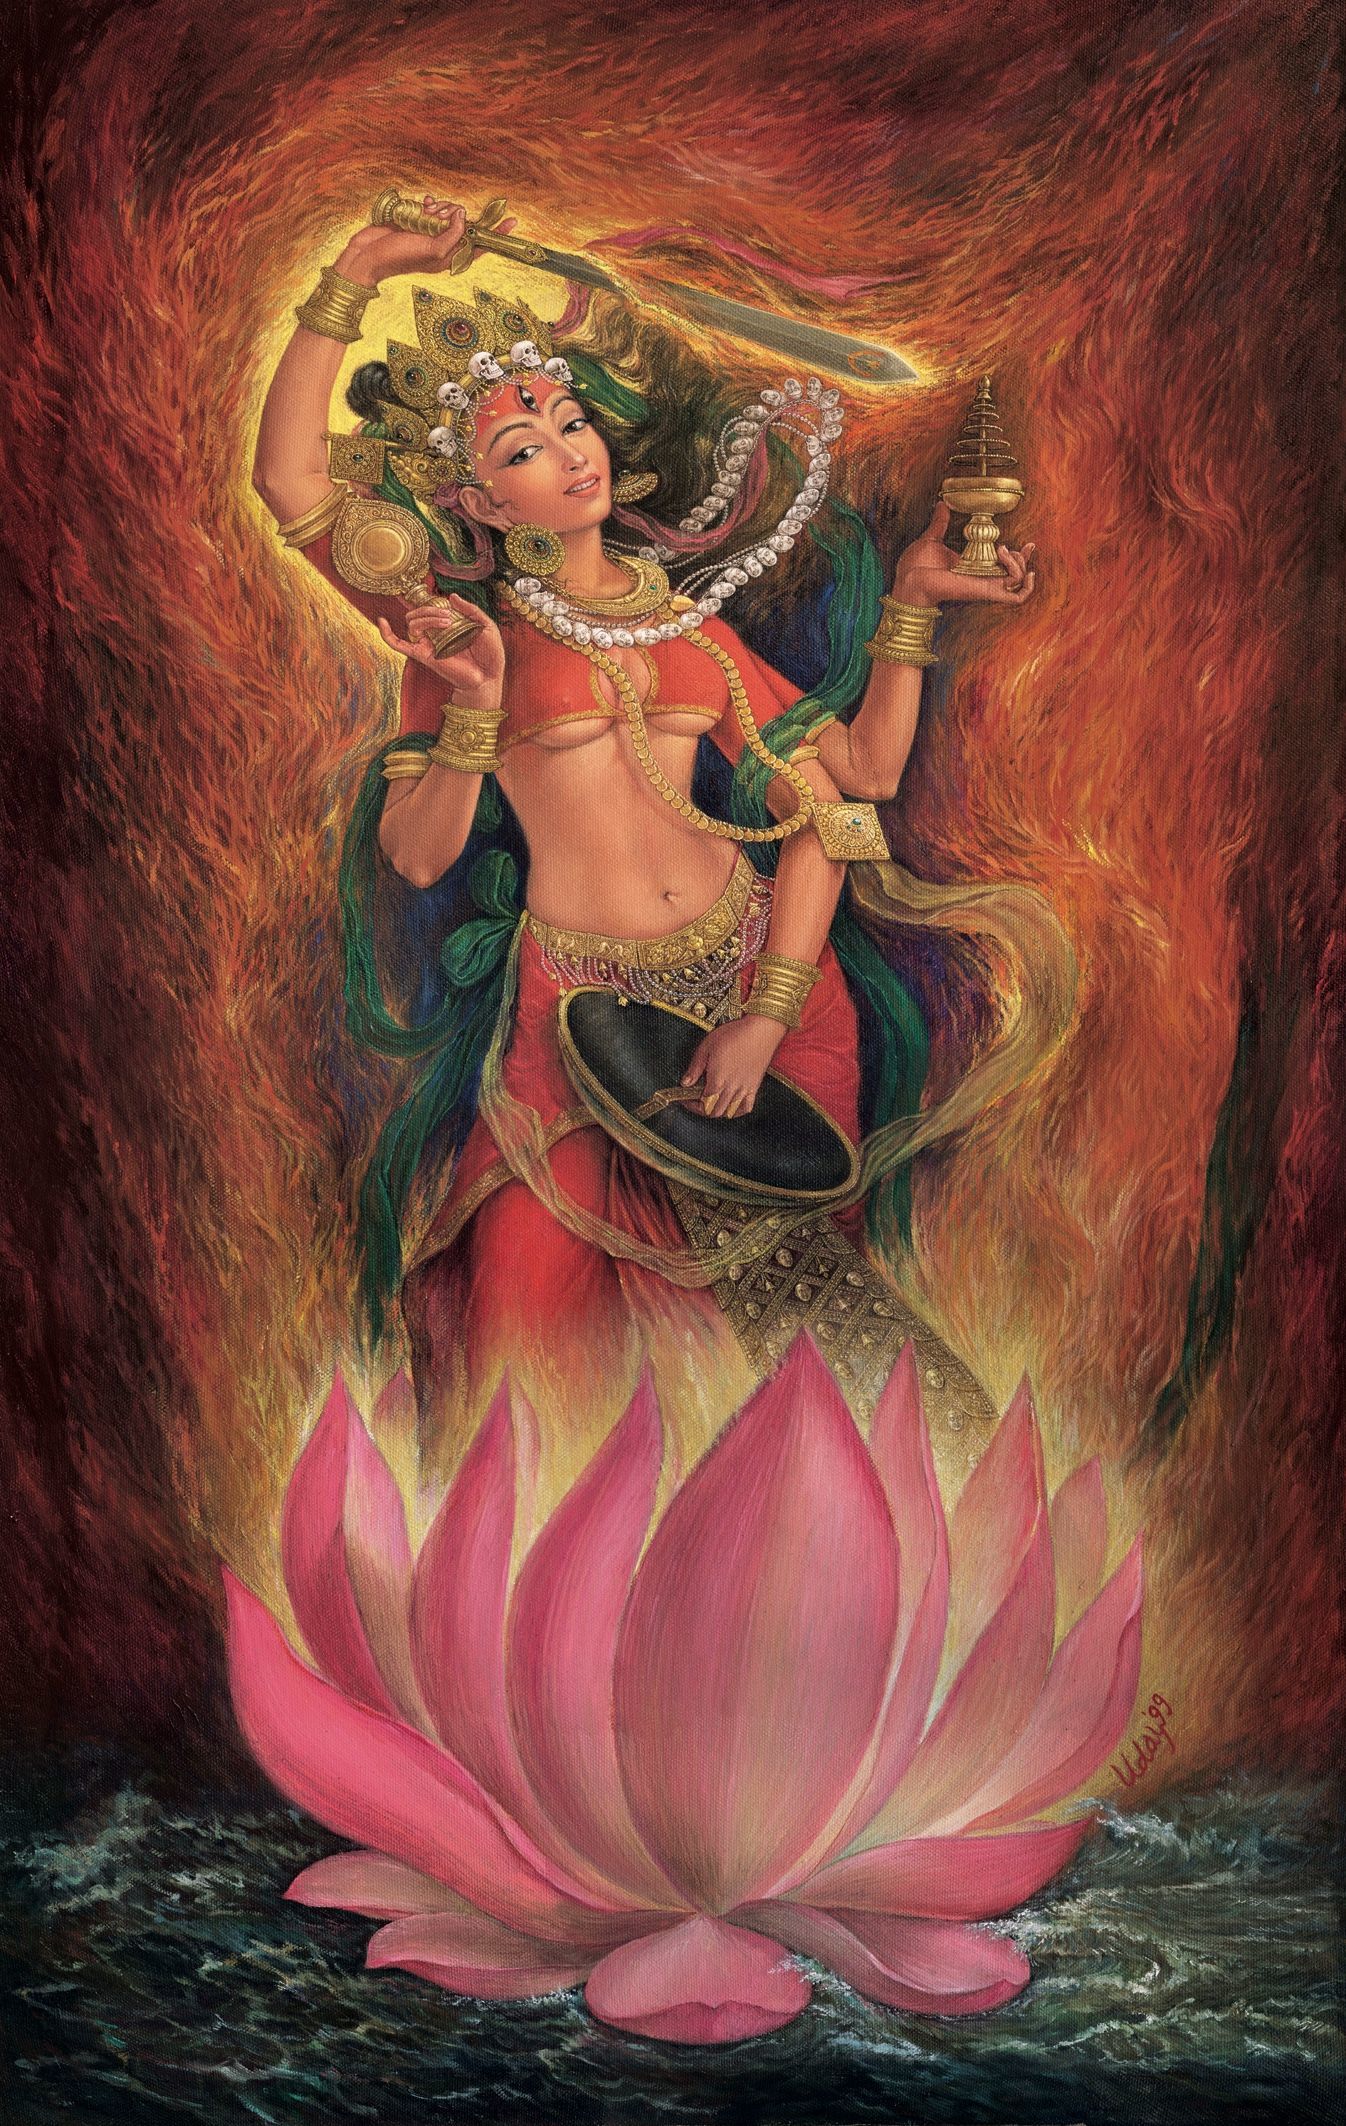 Mahalakshmi, artist by Udaya Charan Shrestha - Hinduism, Painting, Lakshmi